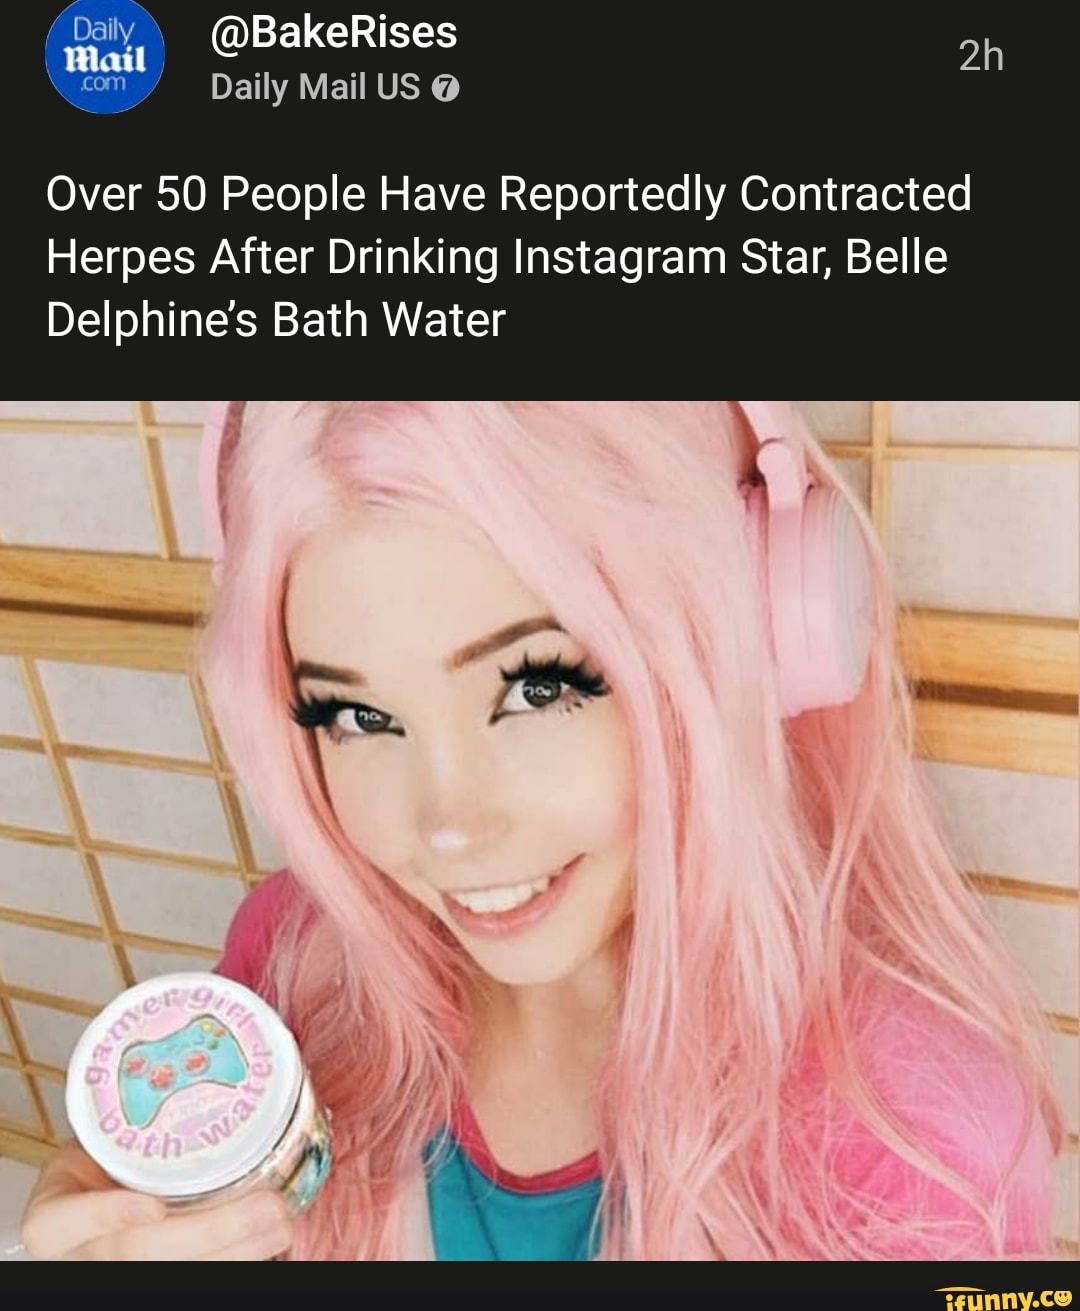 Is Belle Delphine's BathWater Giving People Herpes?